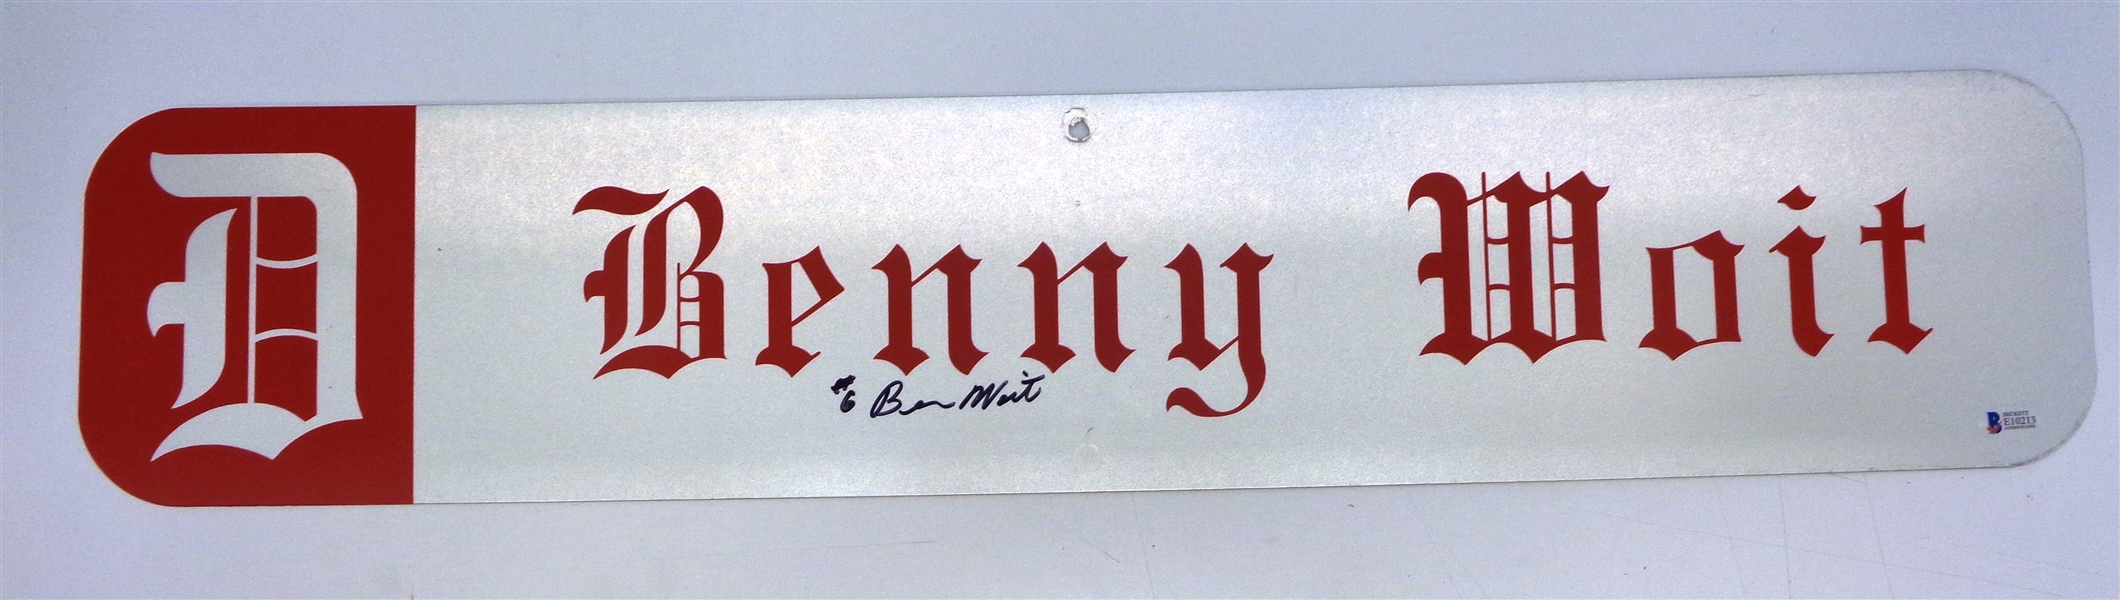 Benny Woit Autographed 6x30 Custom Street Sign